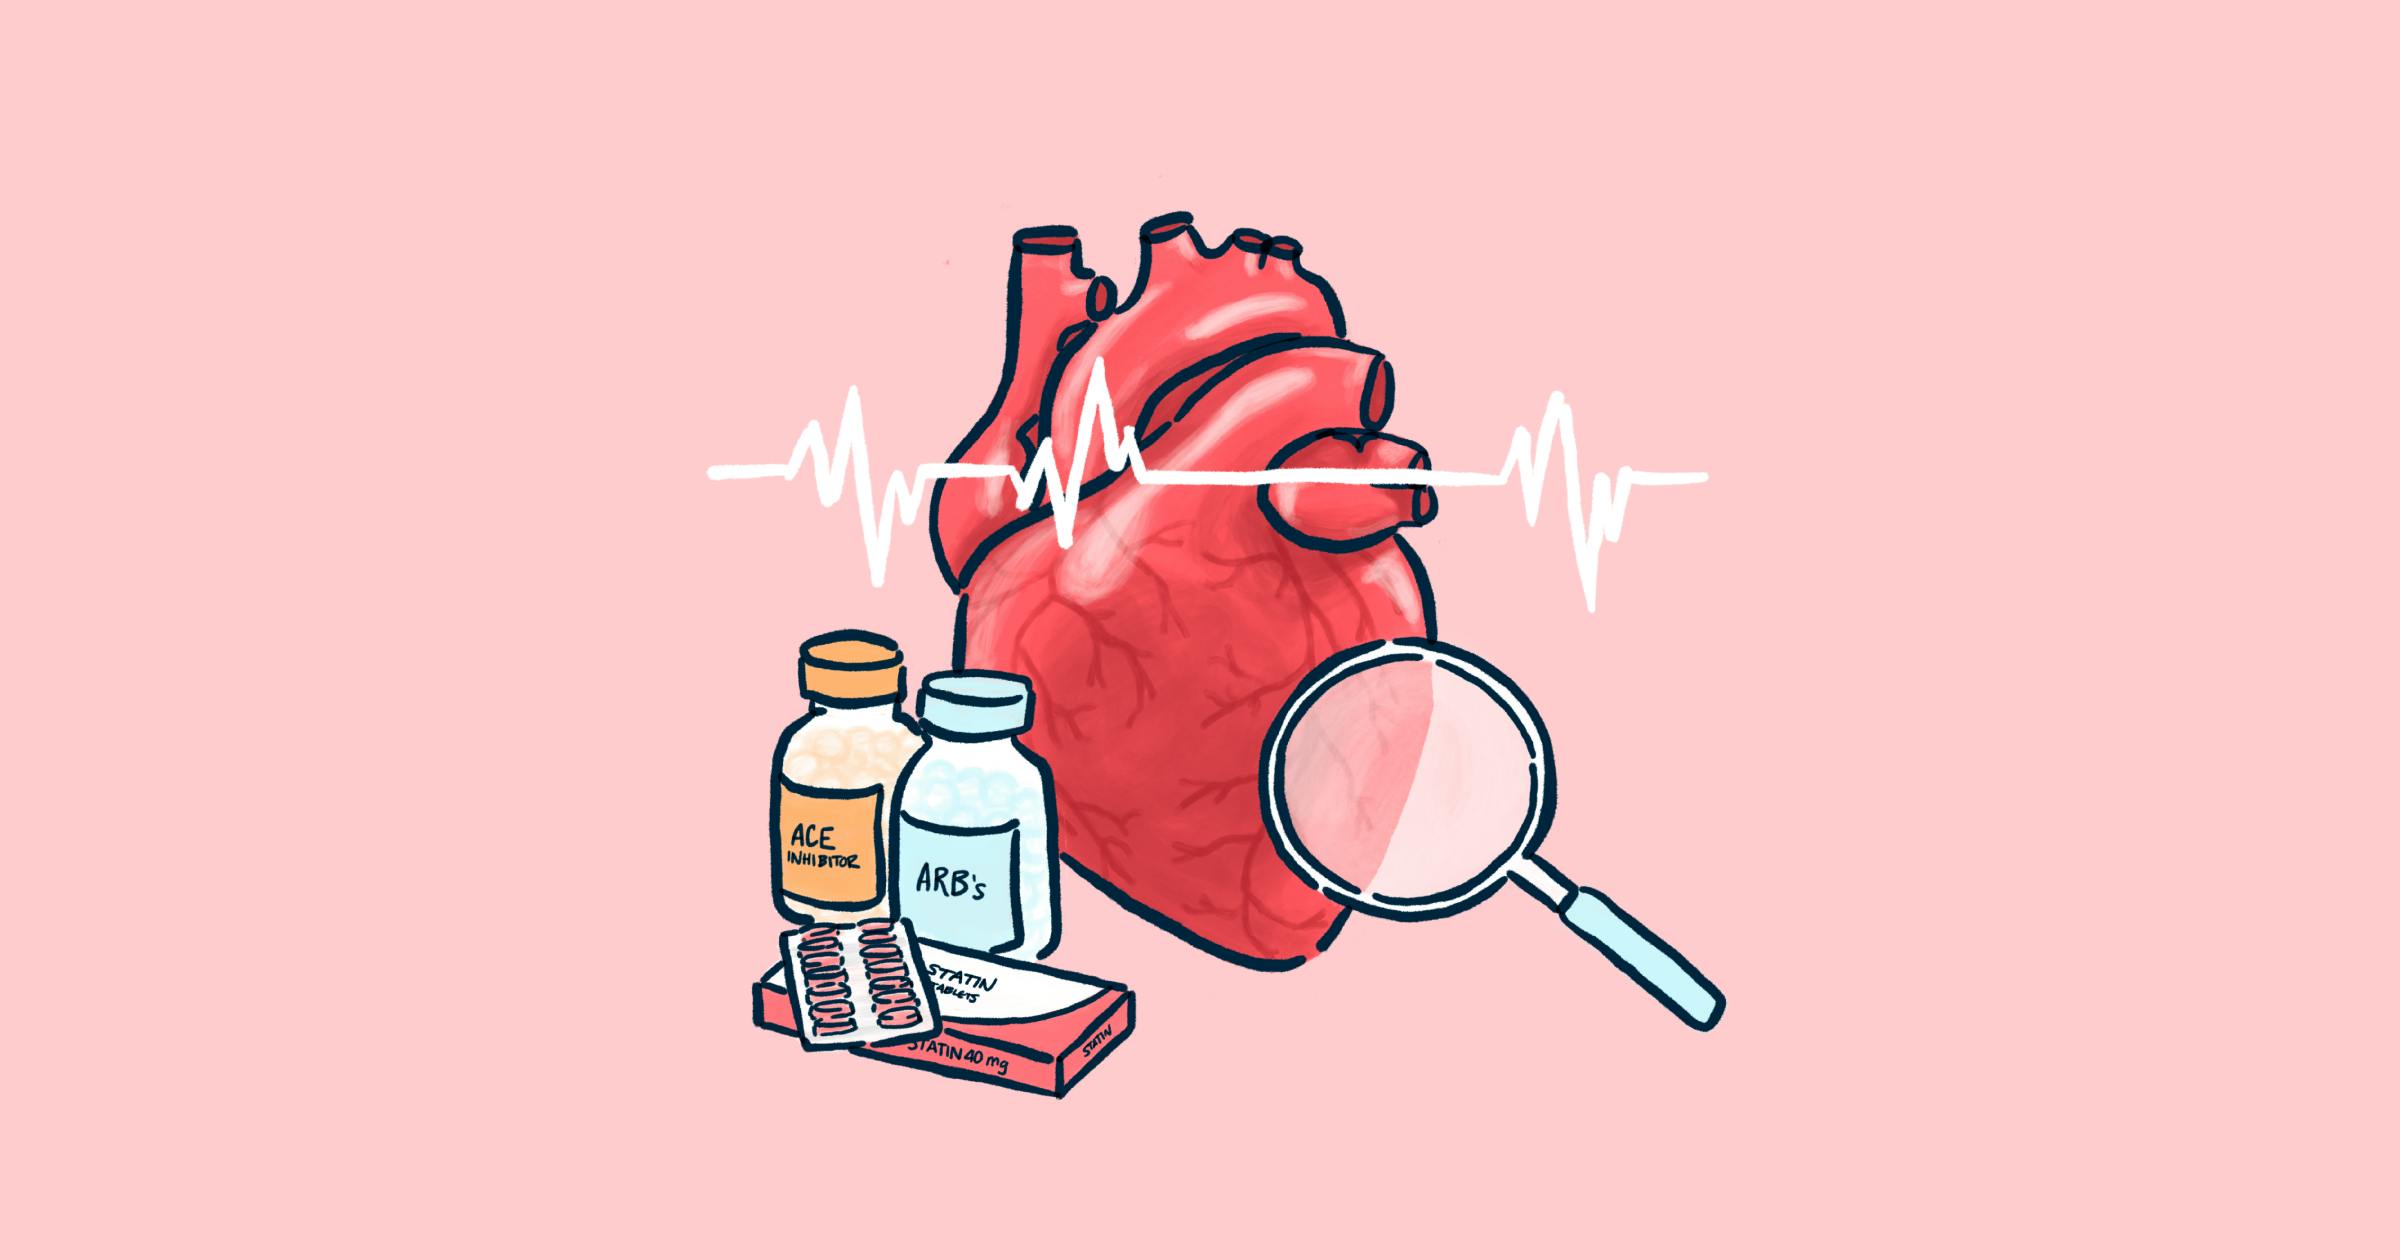 Heart Health 